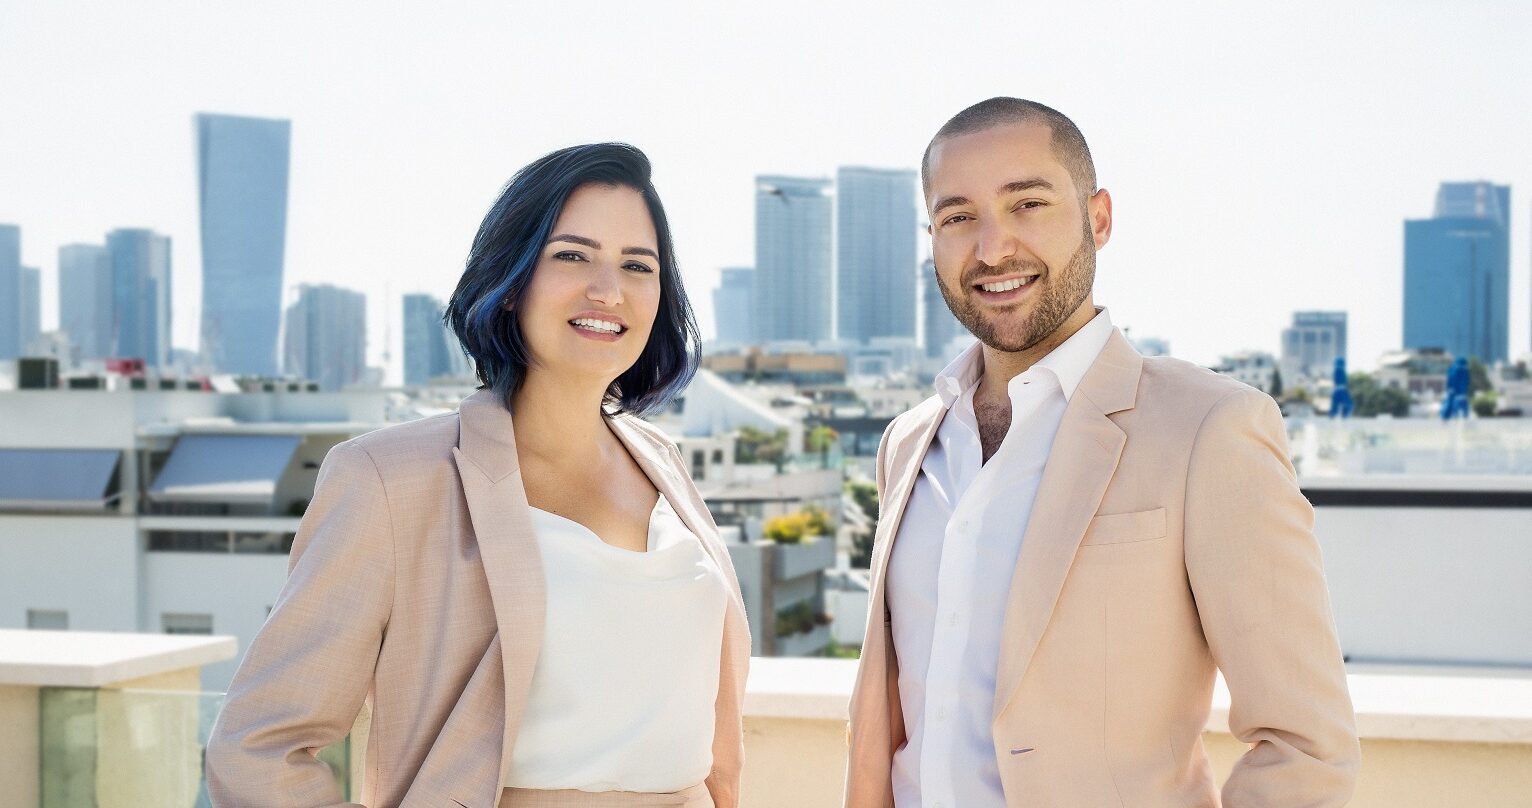 Meron Capital launches USD 50 million fund to invest in promising Israeli entrepreneurs